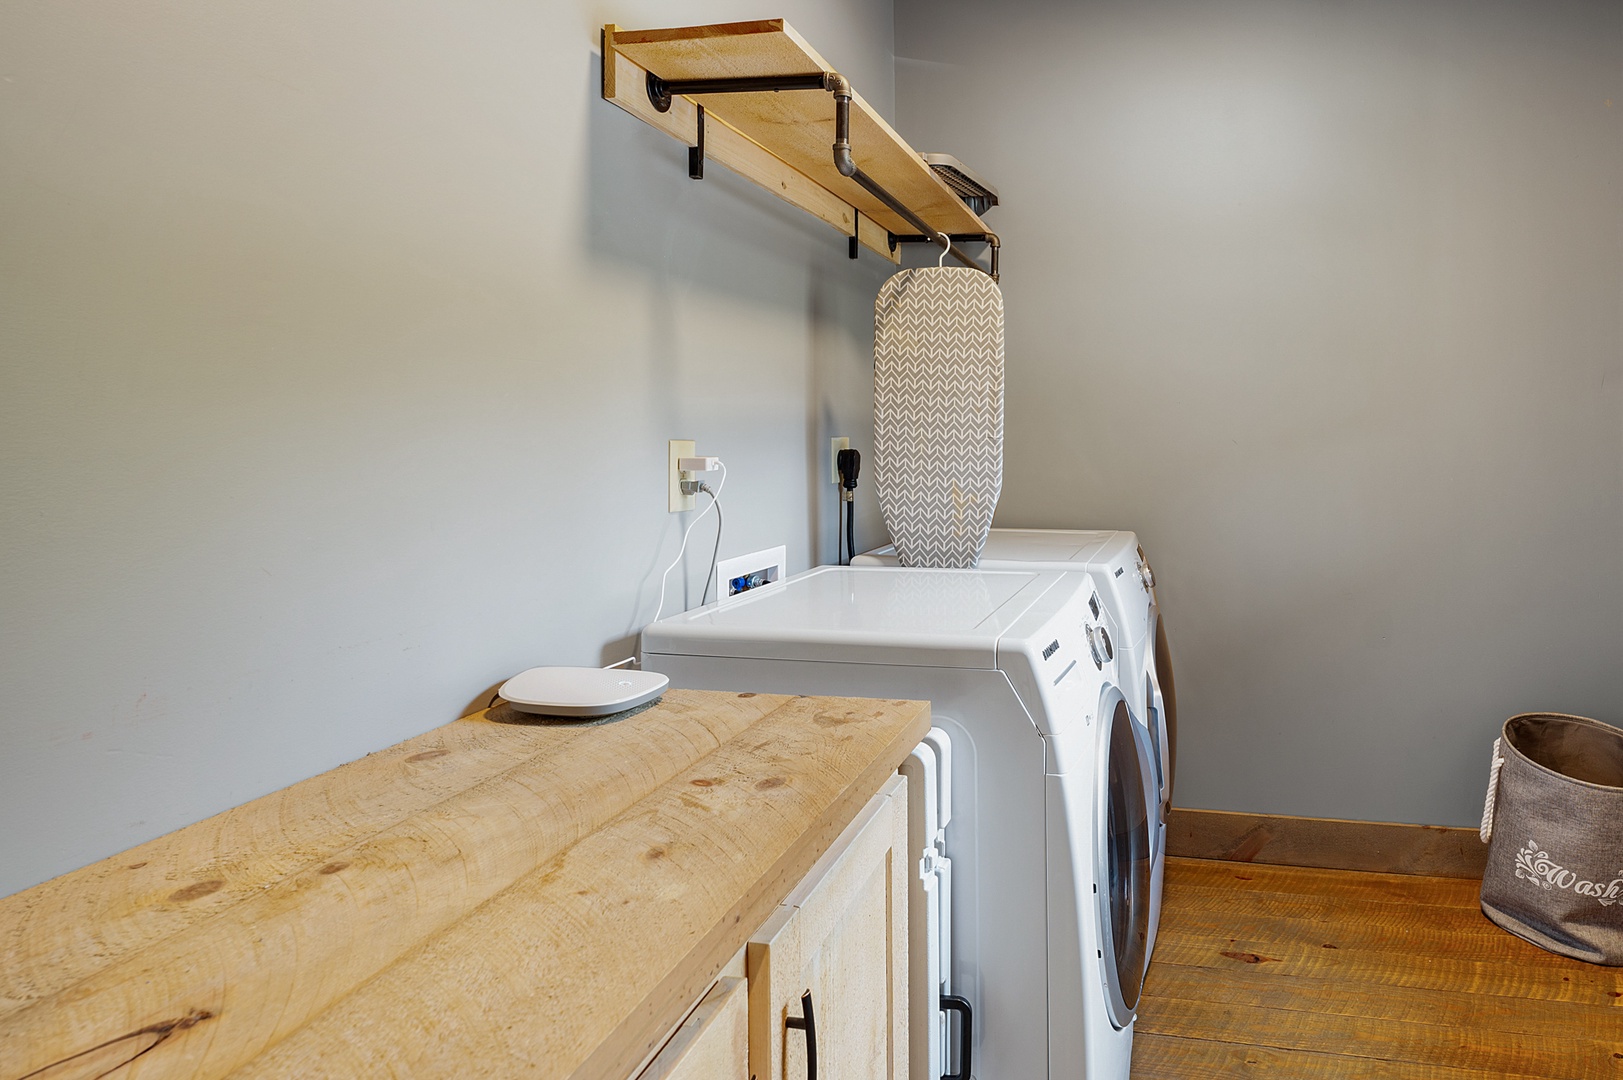 Rustic Elegance - Entry Level Full Laundry Room